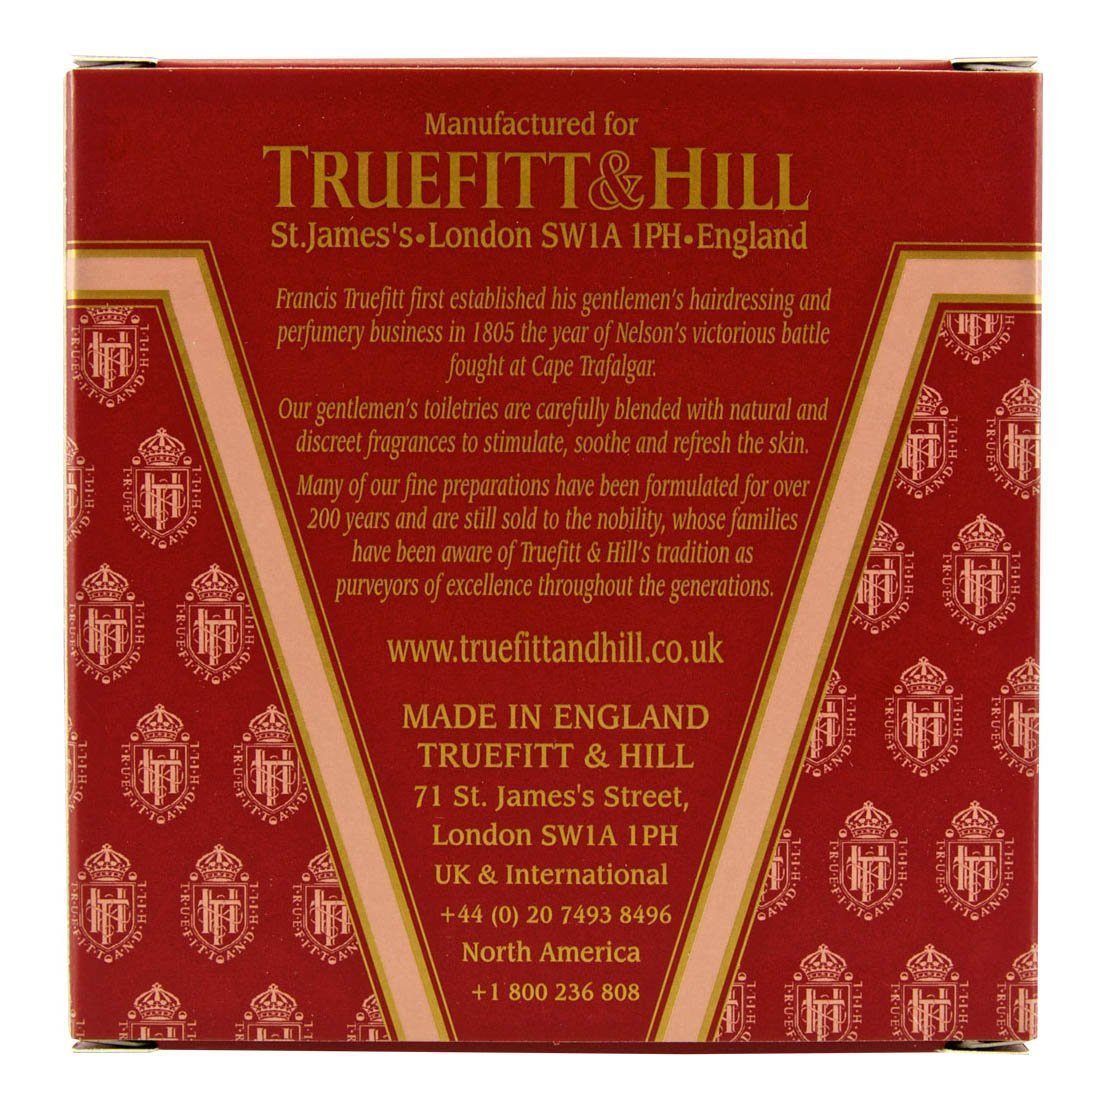 Truefitt & Hill Luxury barbersåpe i treskål - 1805 Barbersåpe i skål Truefitt & Hill 